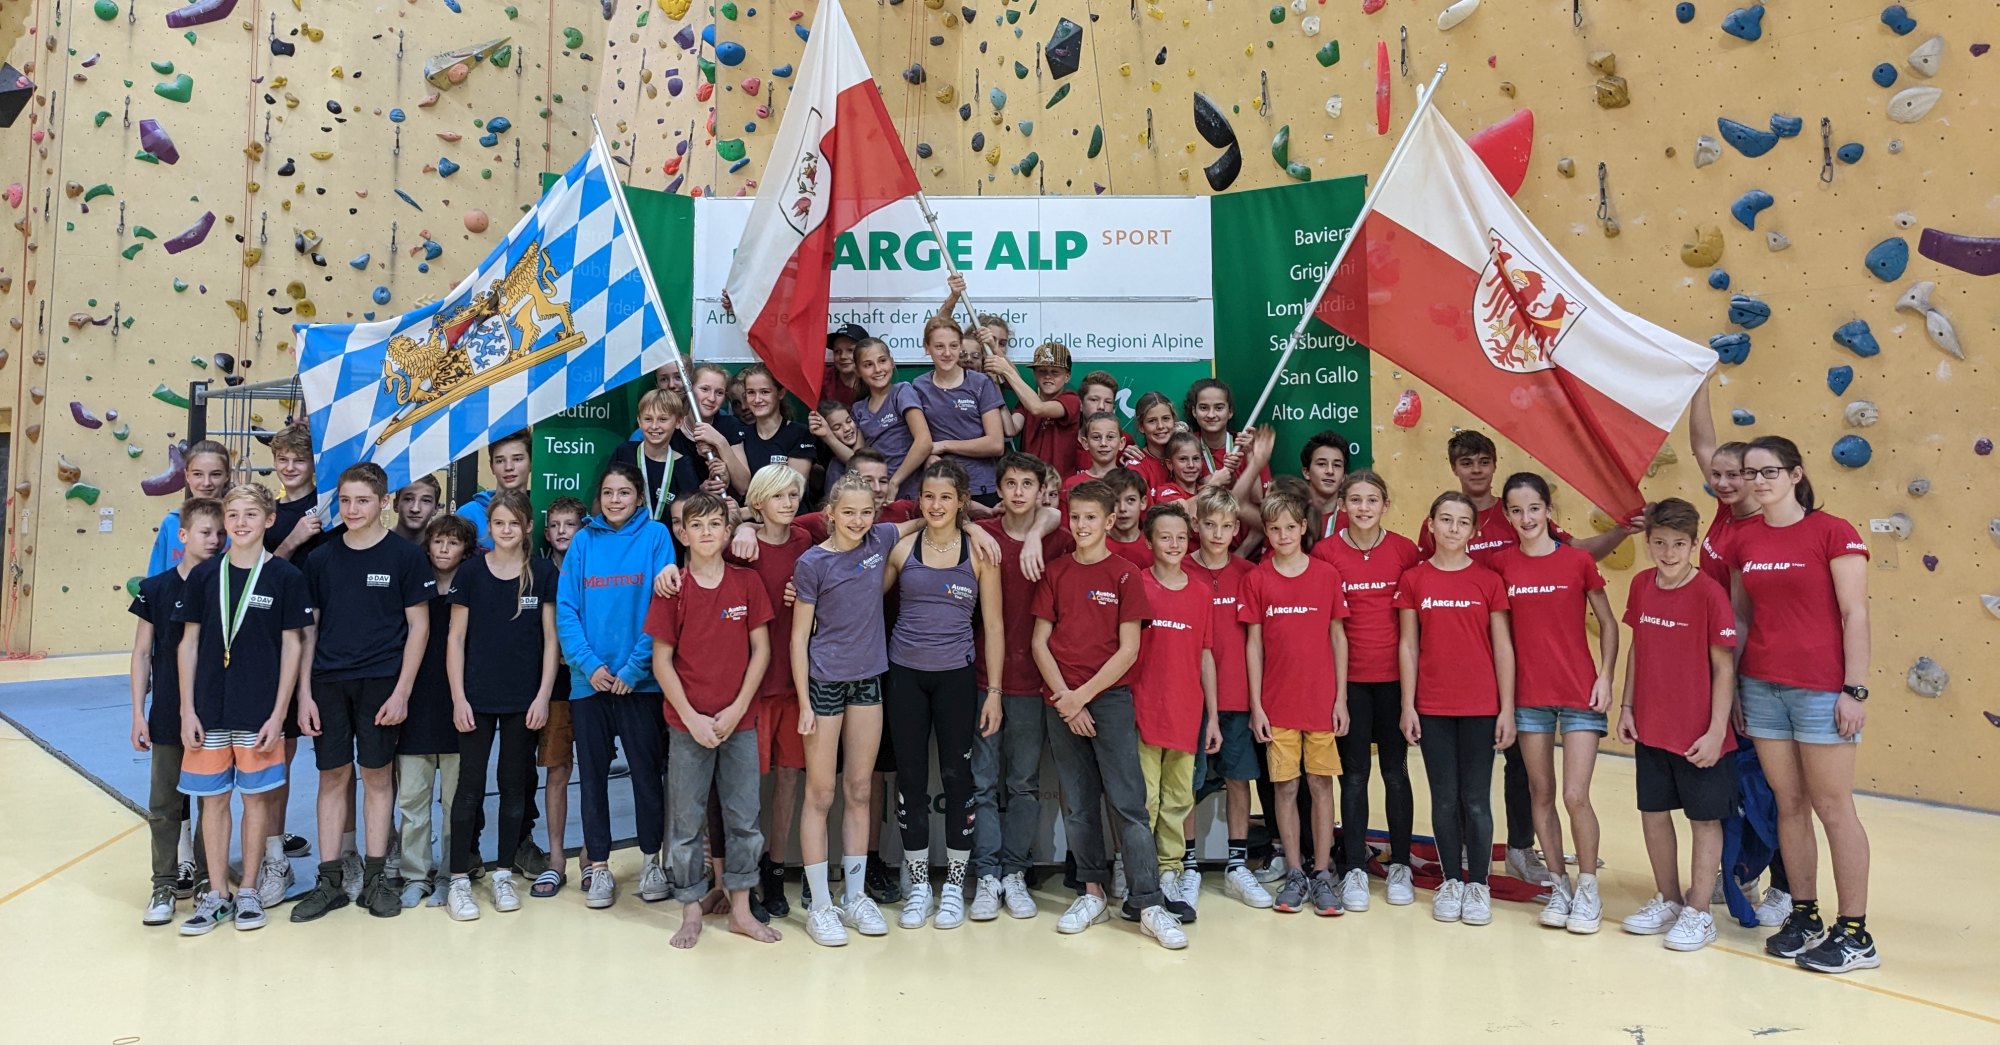 Arge Alp Sportklettern 2022